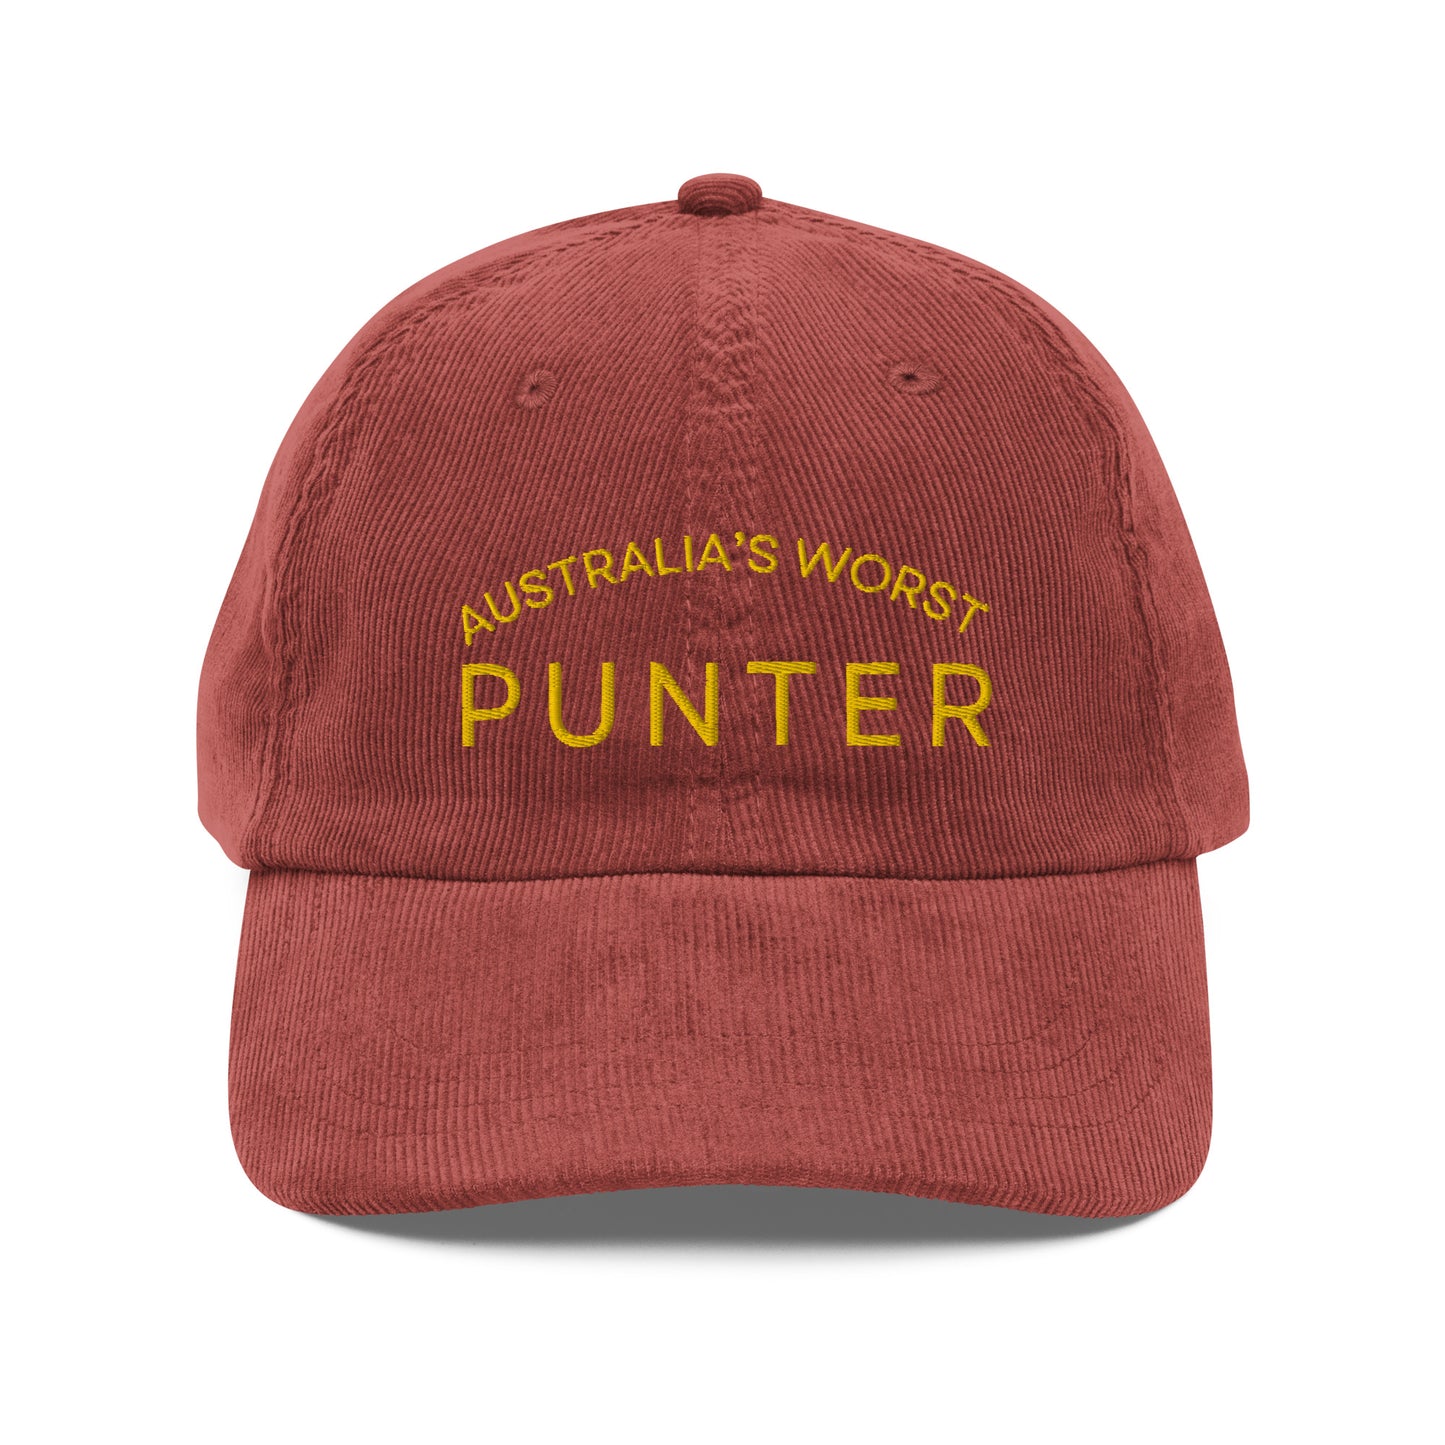 Australia's Worst Punter - Vintage Corduroy Cap